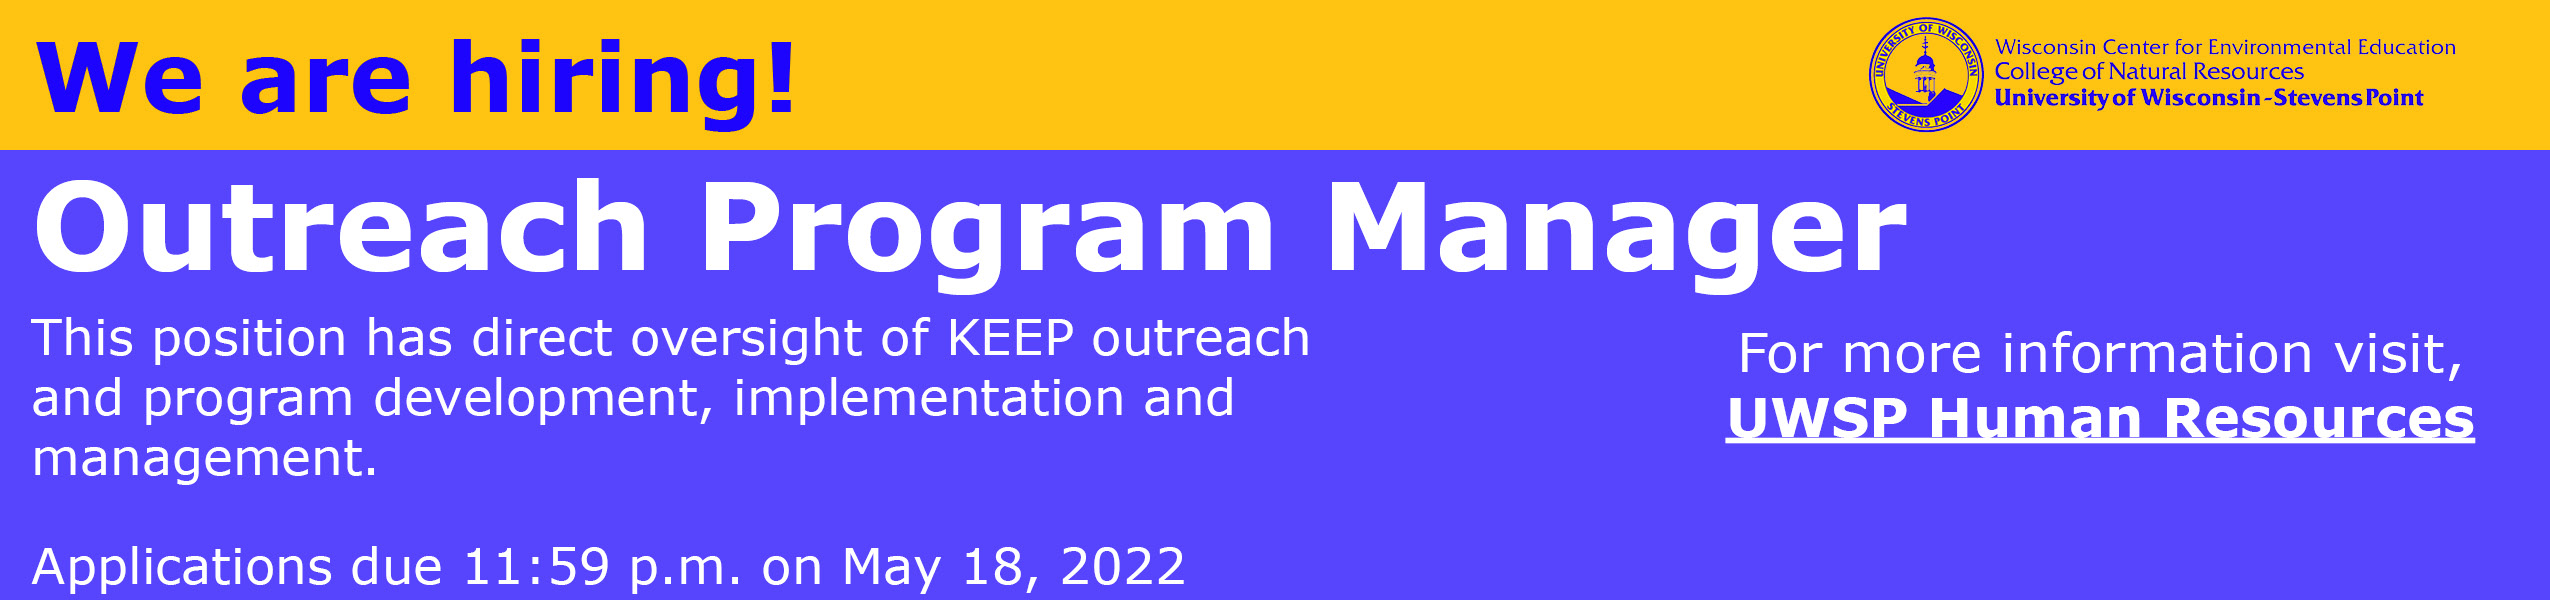 KEEP Outreach Program Manager.jpg